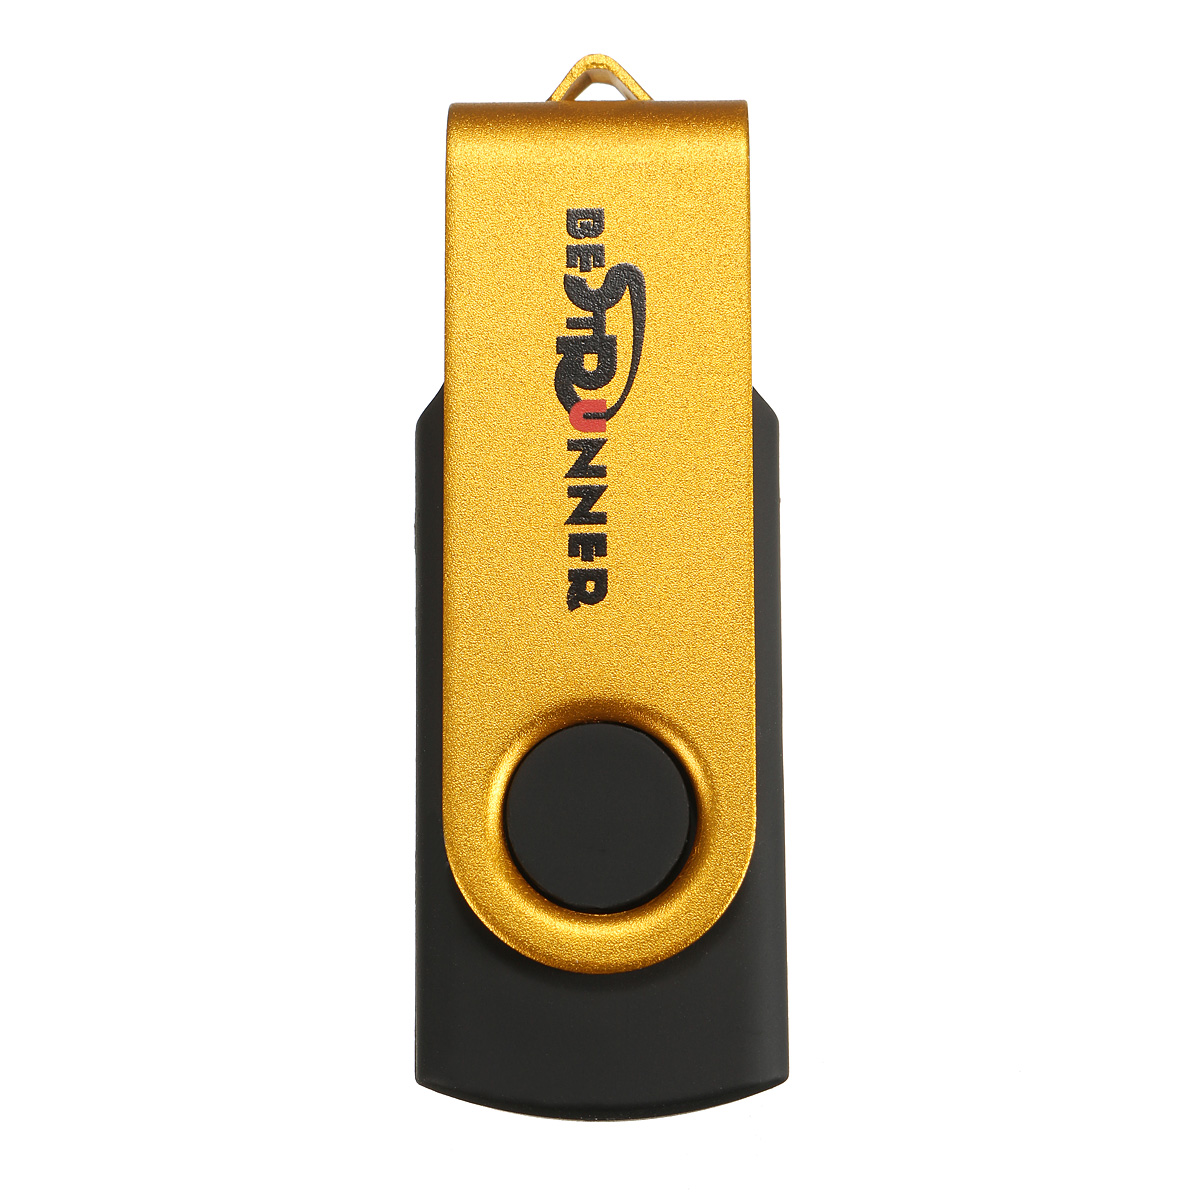 Bestrunner-2GB-USB-20-360deg-Rotation-High-Speed-Flash-Drive-Thumb-Memory-U-Disk-1783060-3